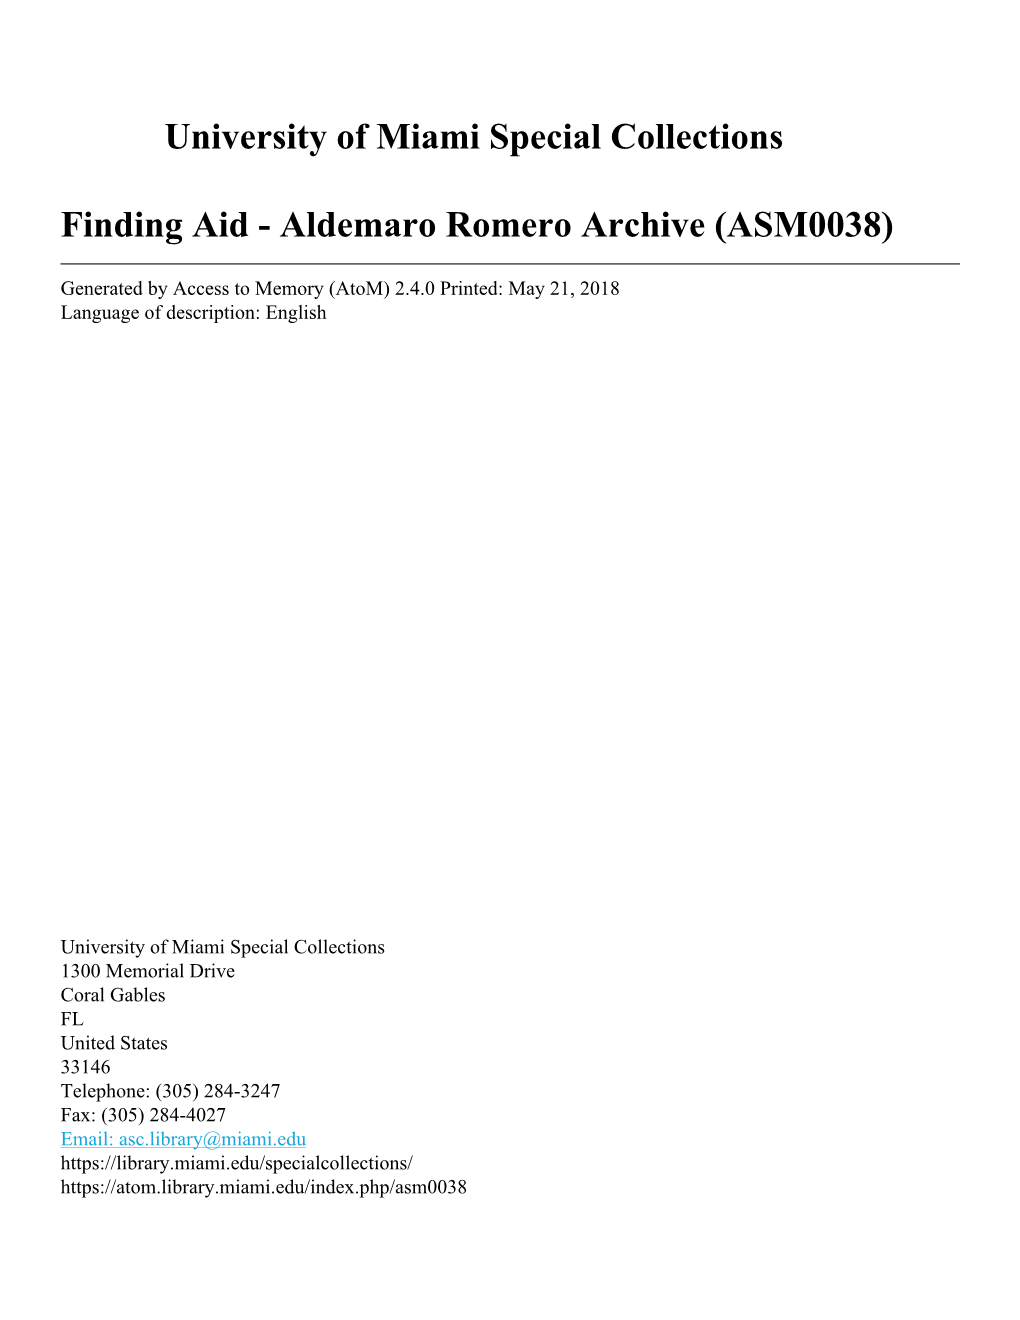 Aldemaro Romero Archive (ASM0038)